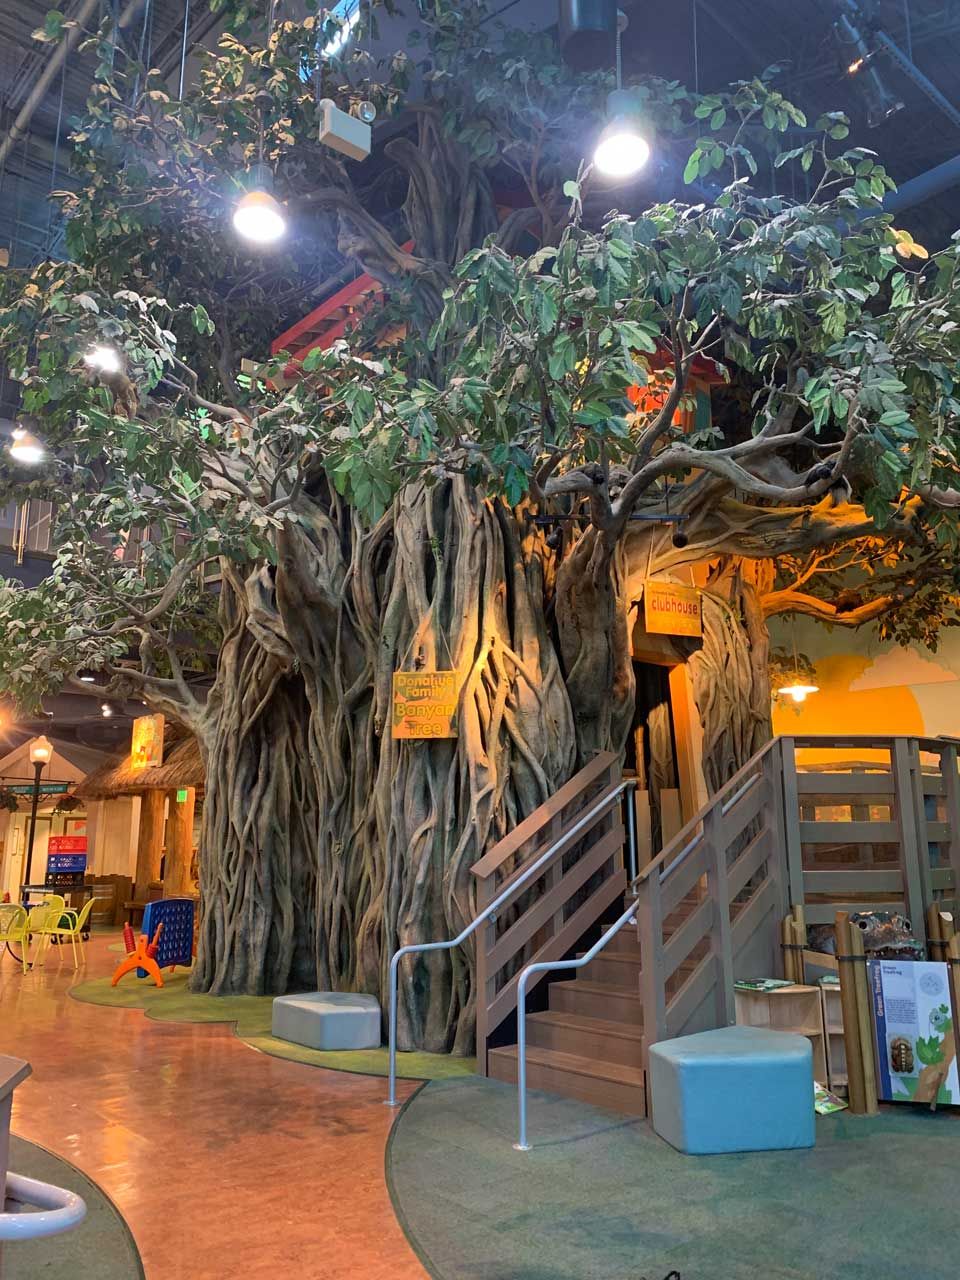 Banyan Tree Exhibit